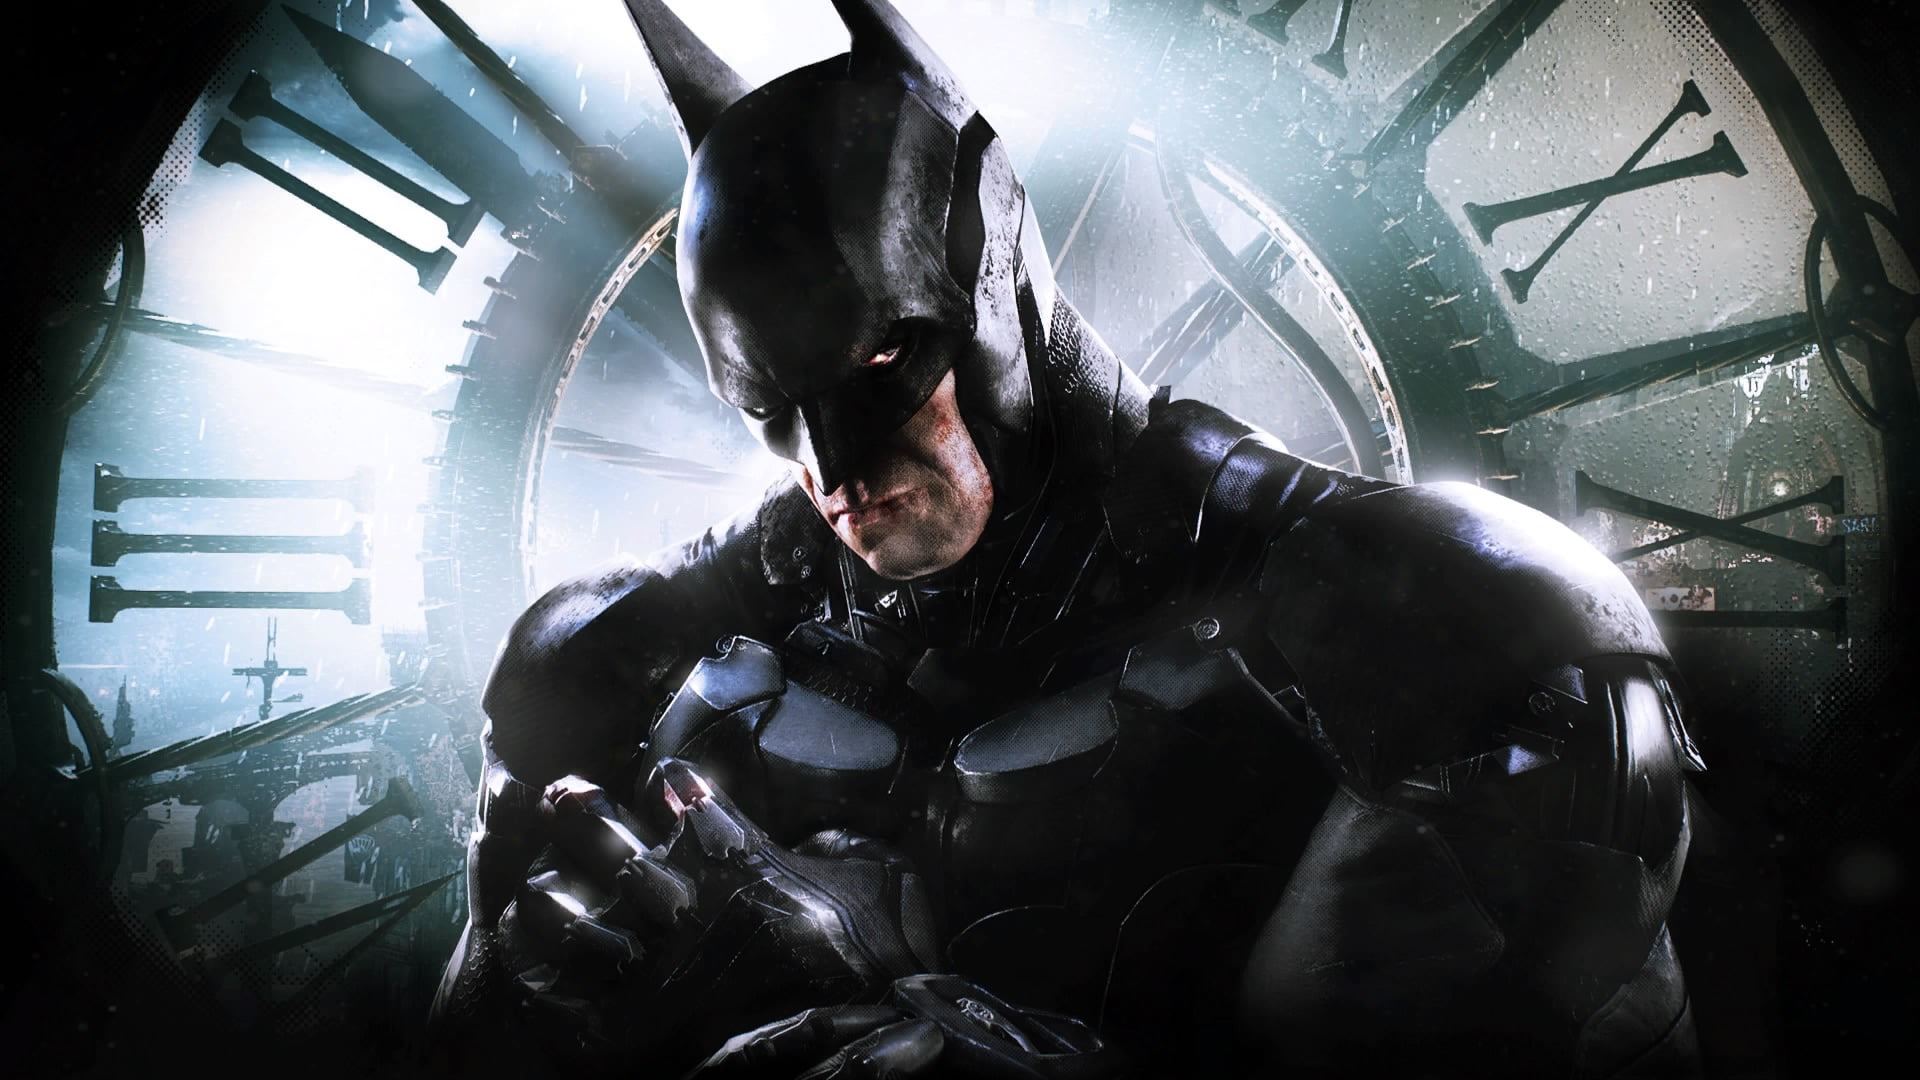 Cloak, Armor, Bruce Wayne, The Dark Knight, Equipment, Warner Bros. Interactive Entertainment